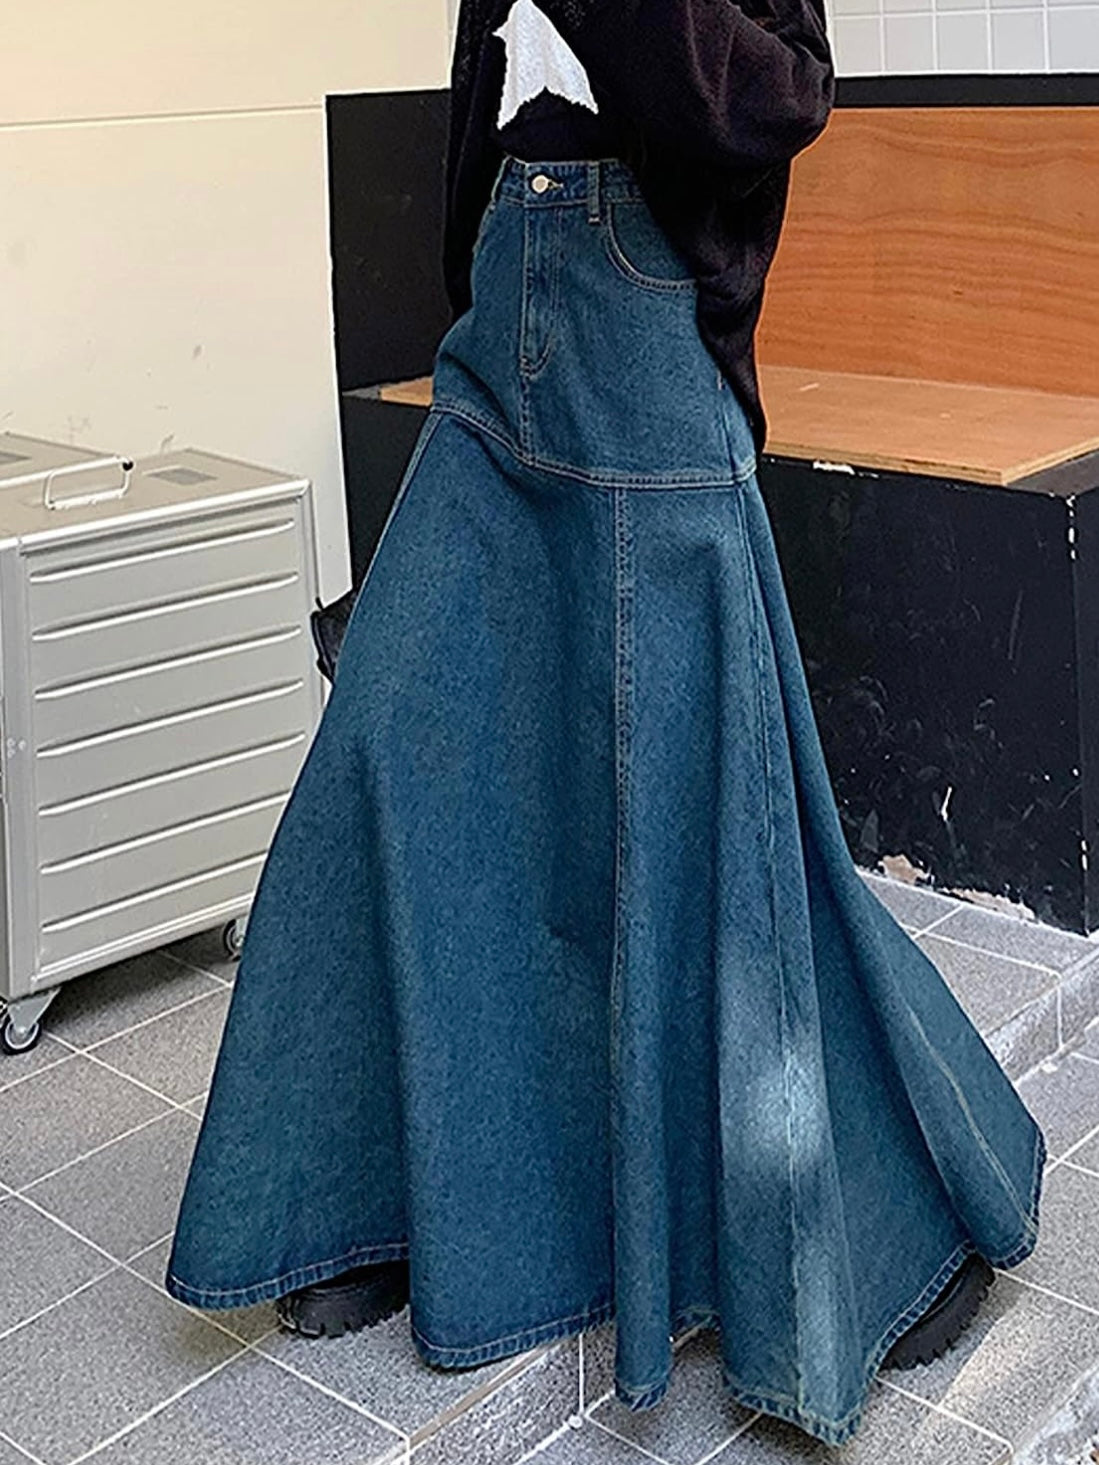 Blue denim maxi skirt